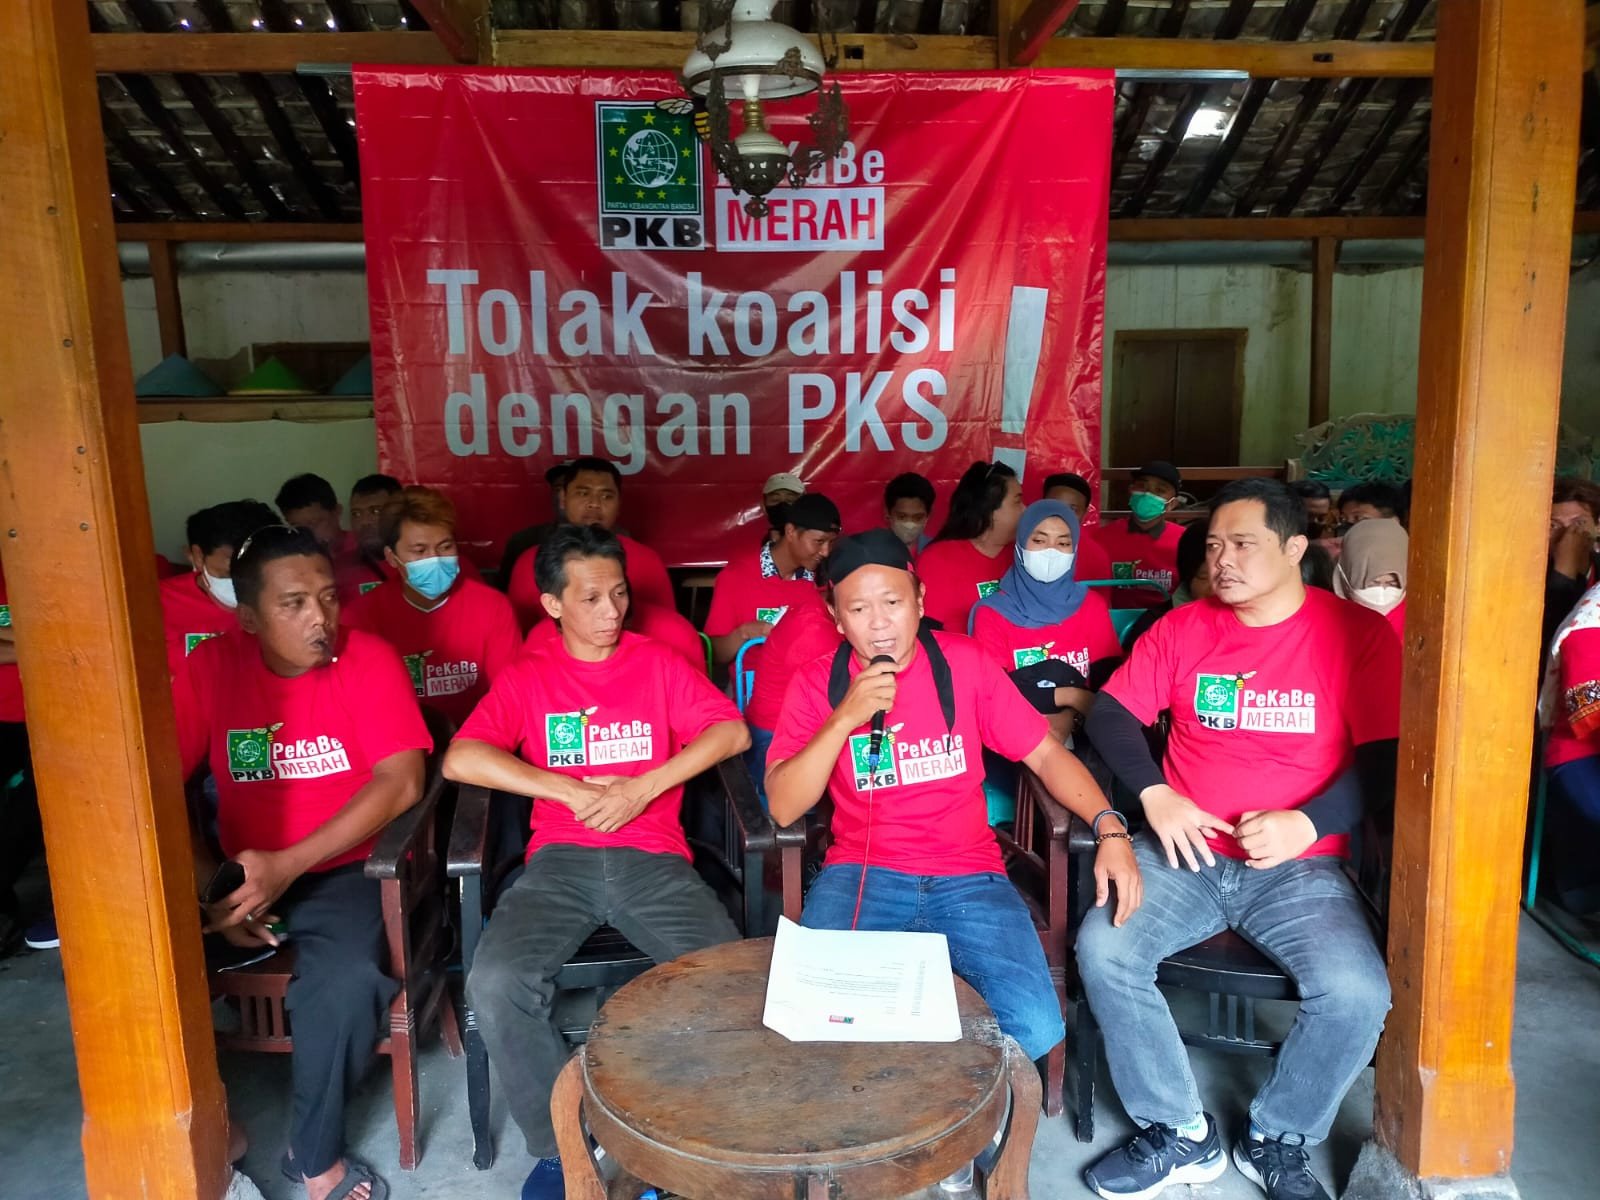 Tolak Koalisi dengan PKS, PKB Merah: Bertentangan dengan Suasana Kebatinan Kader 